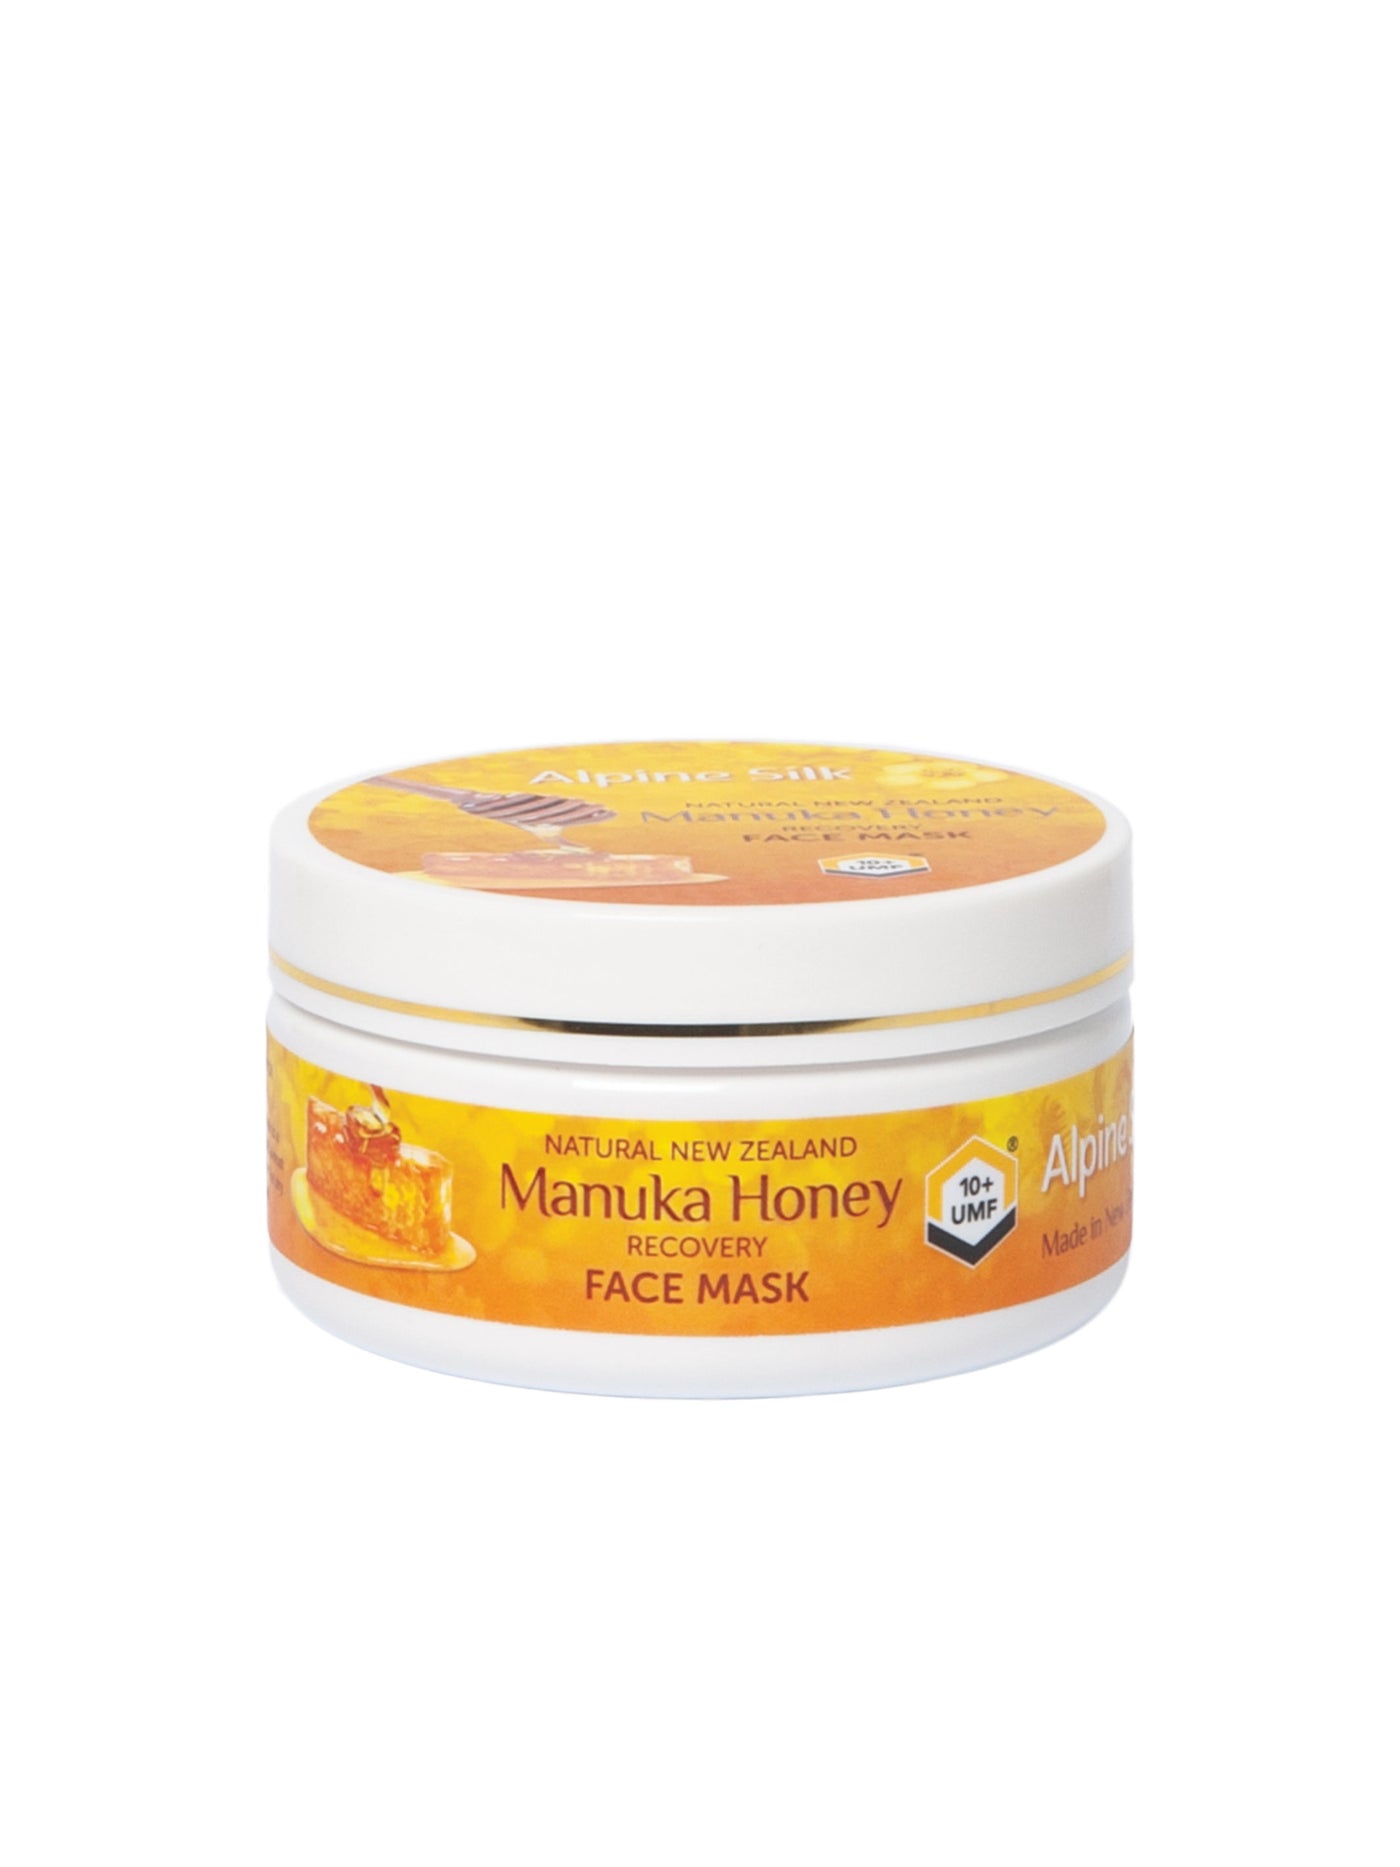 Alpine Silk Manuka Honey Face Mask 100g